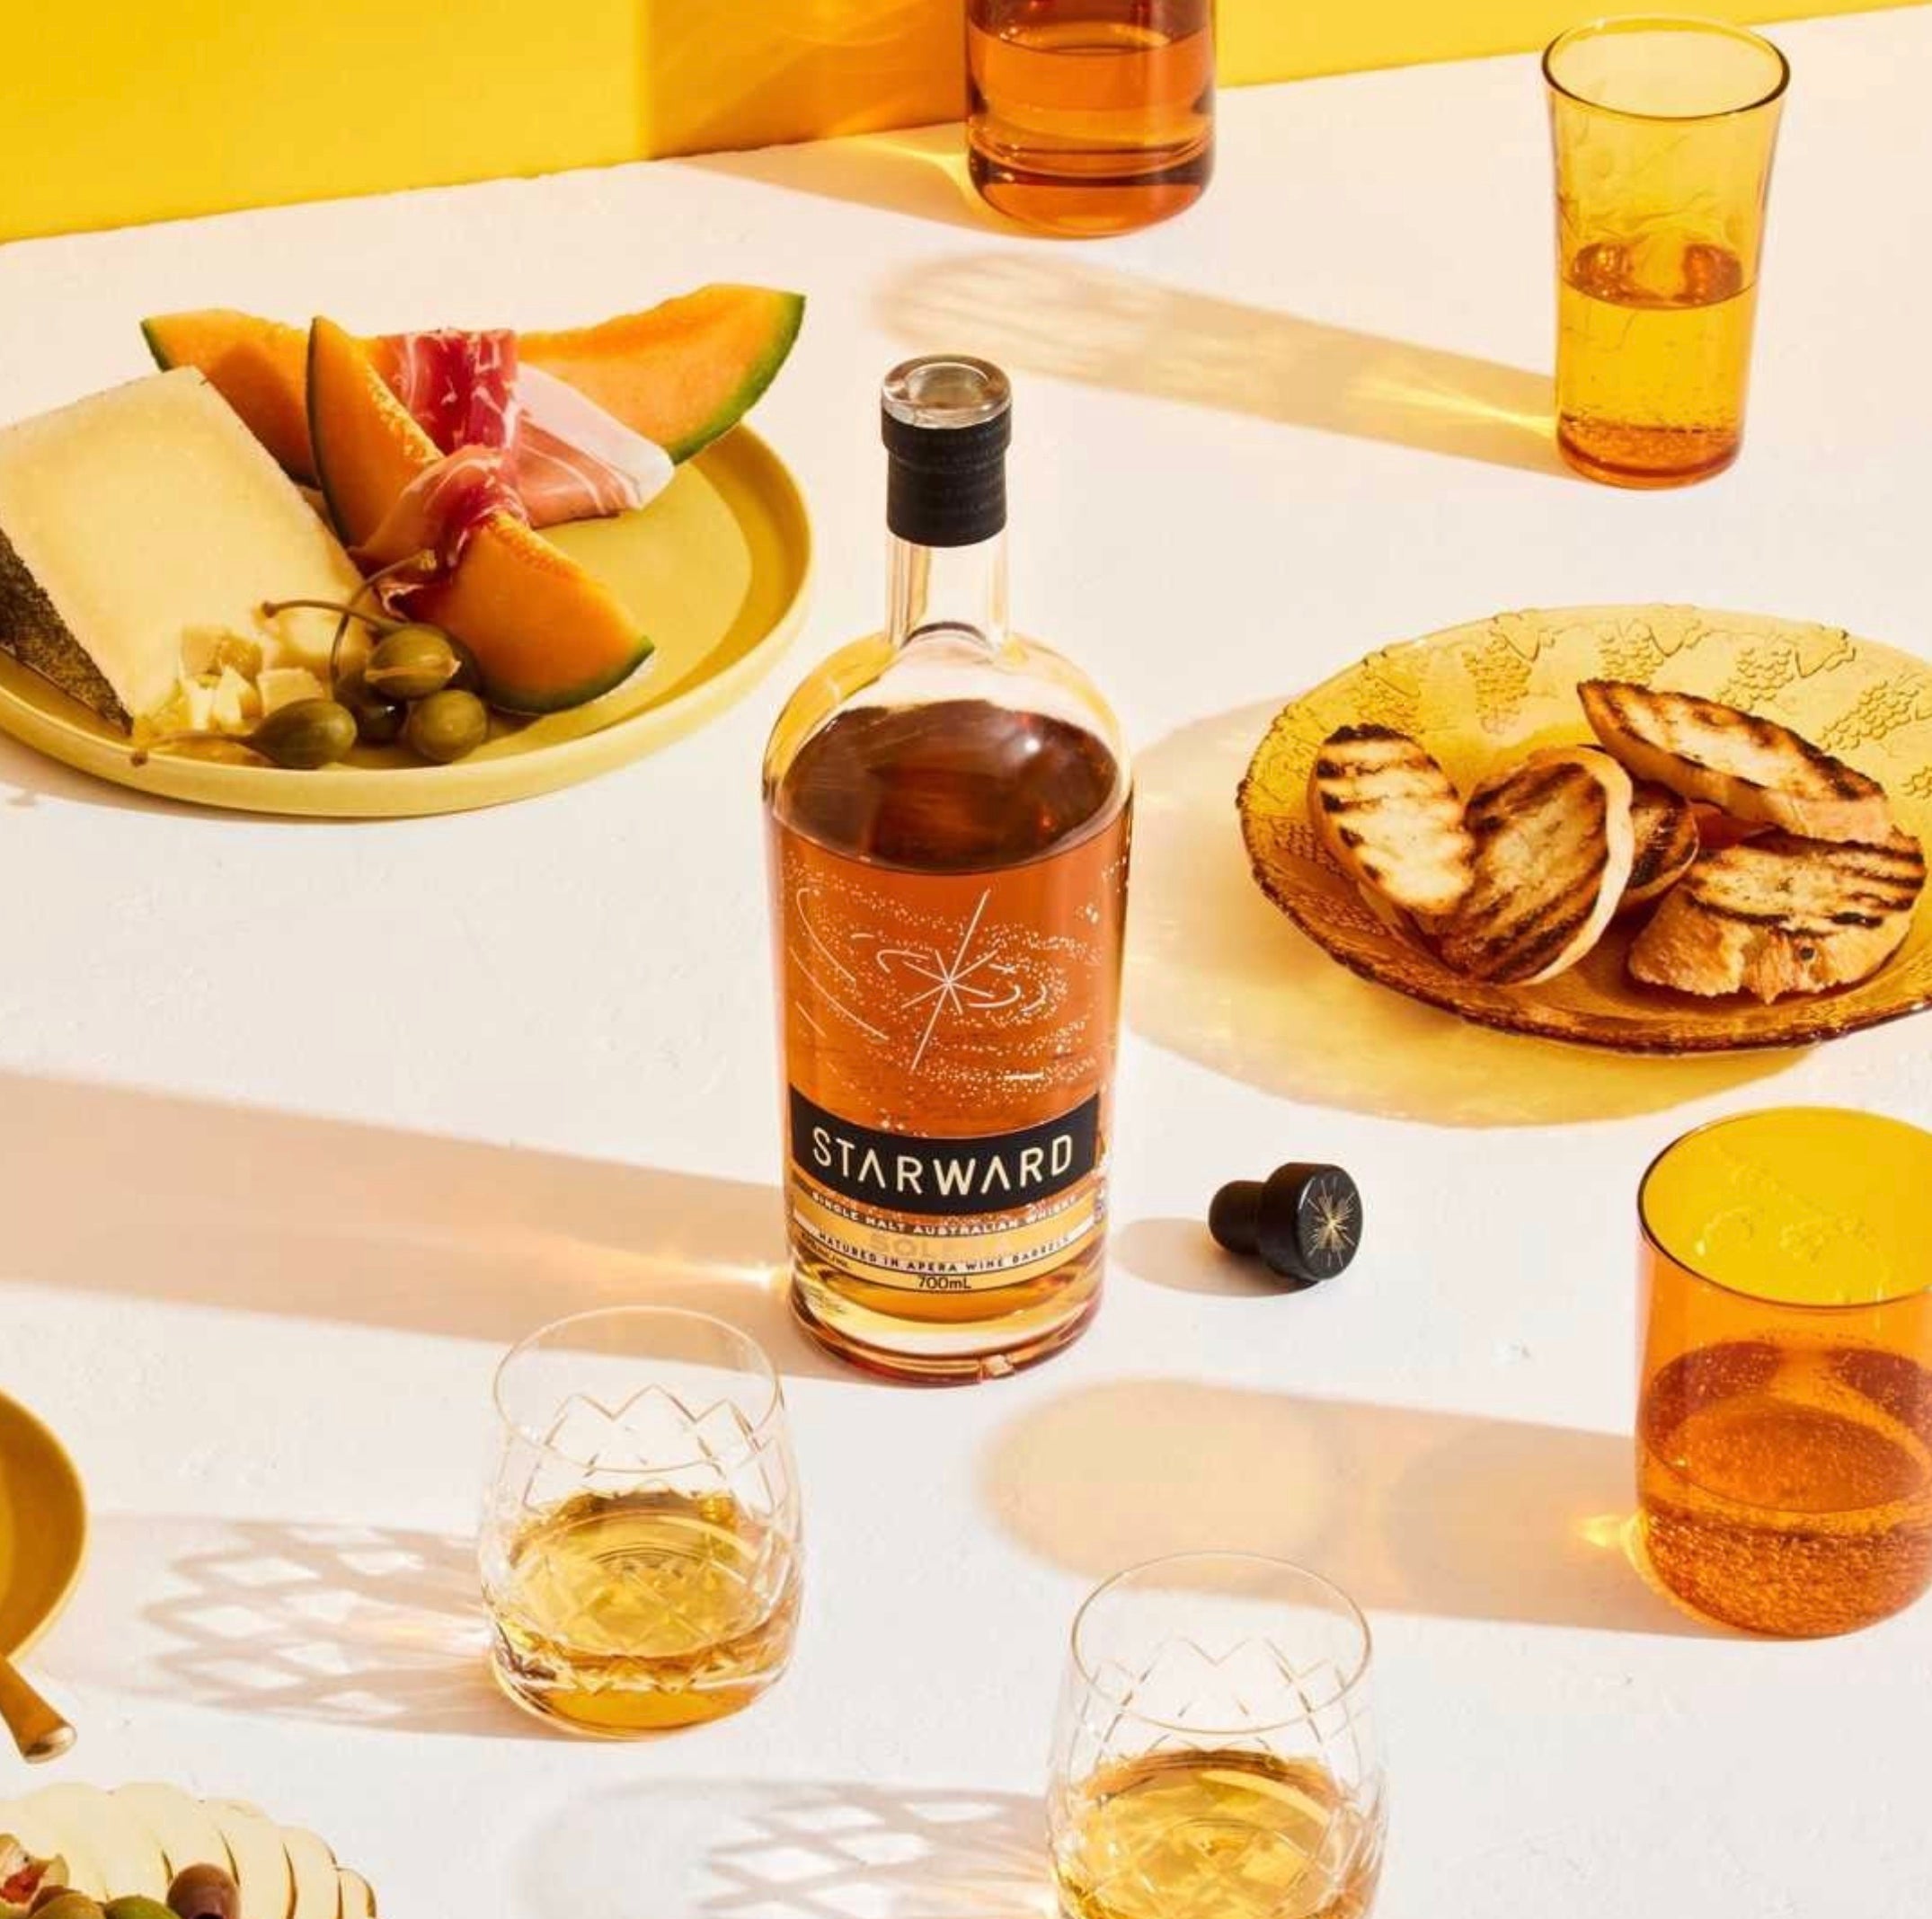 Starward Solera Single Malt Australian Whisky